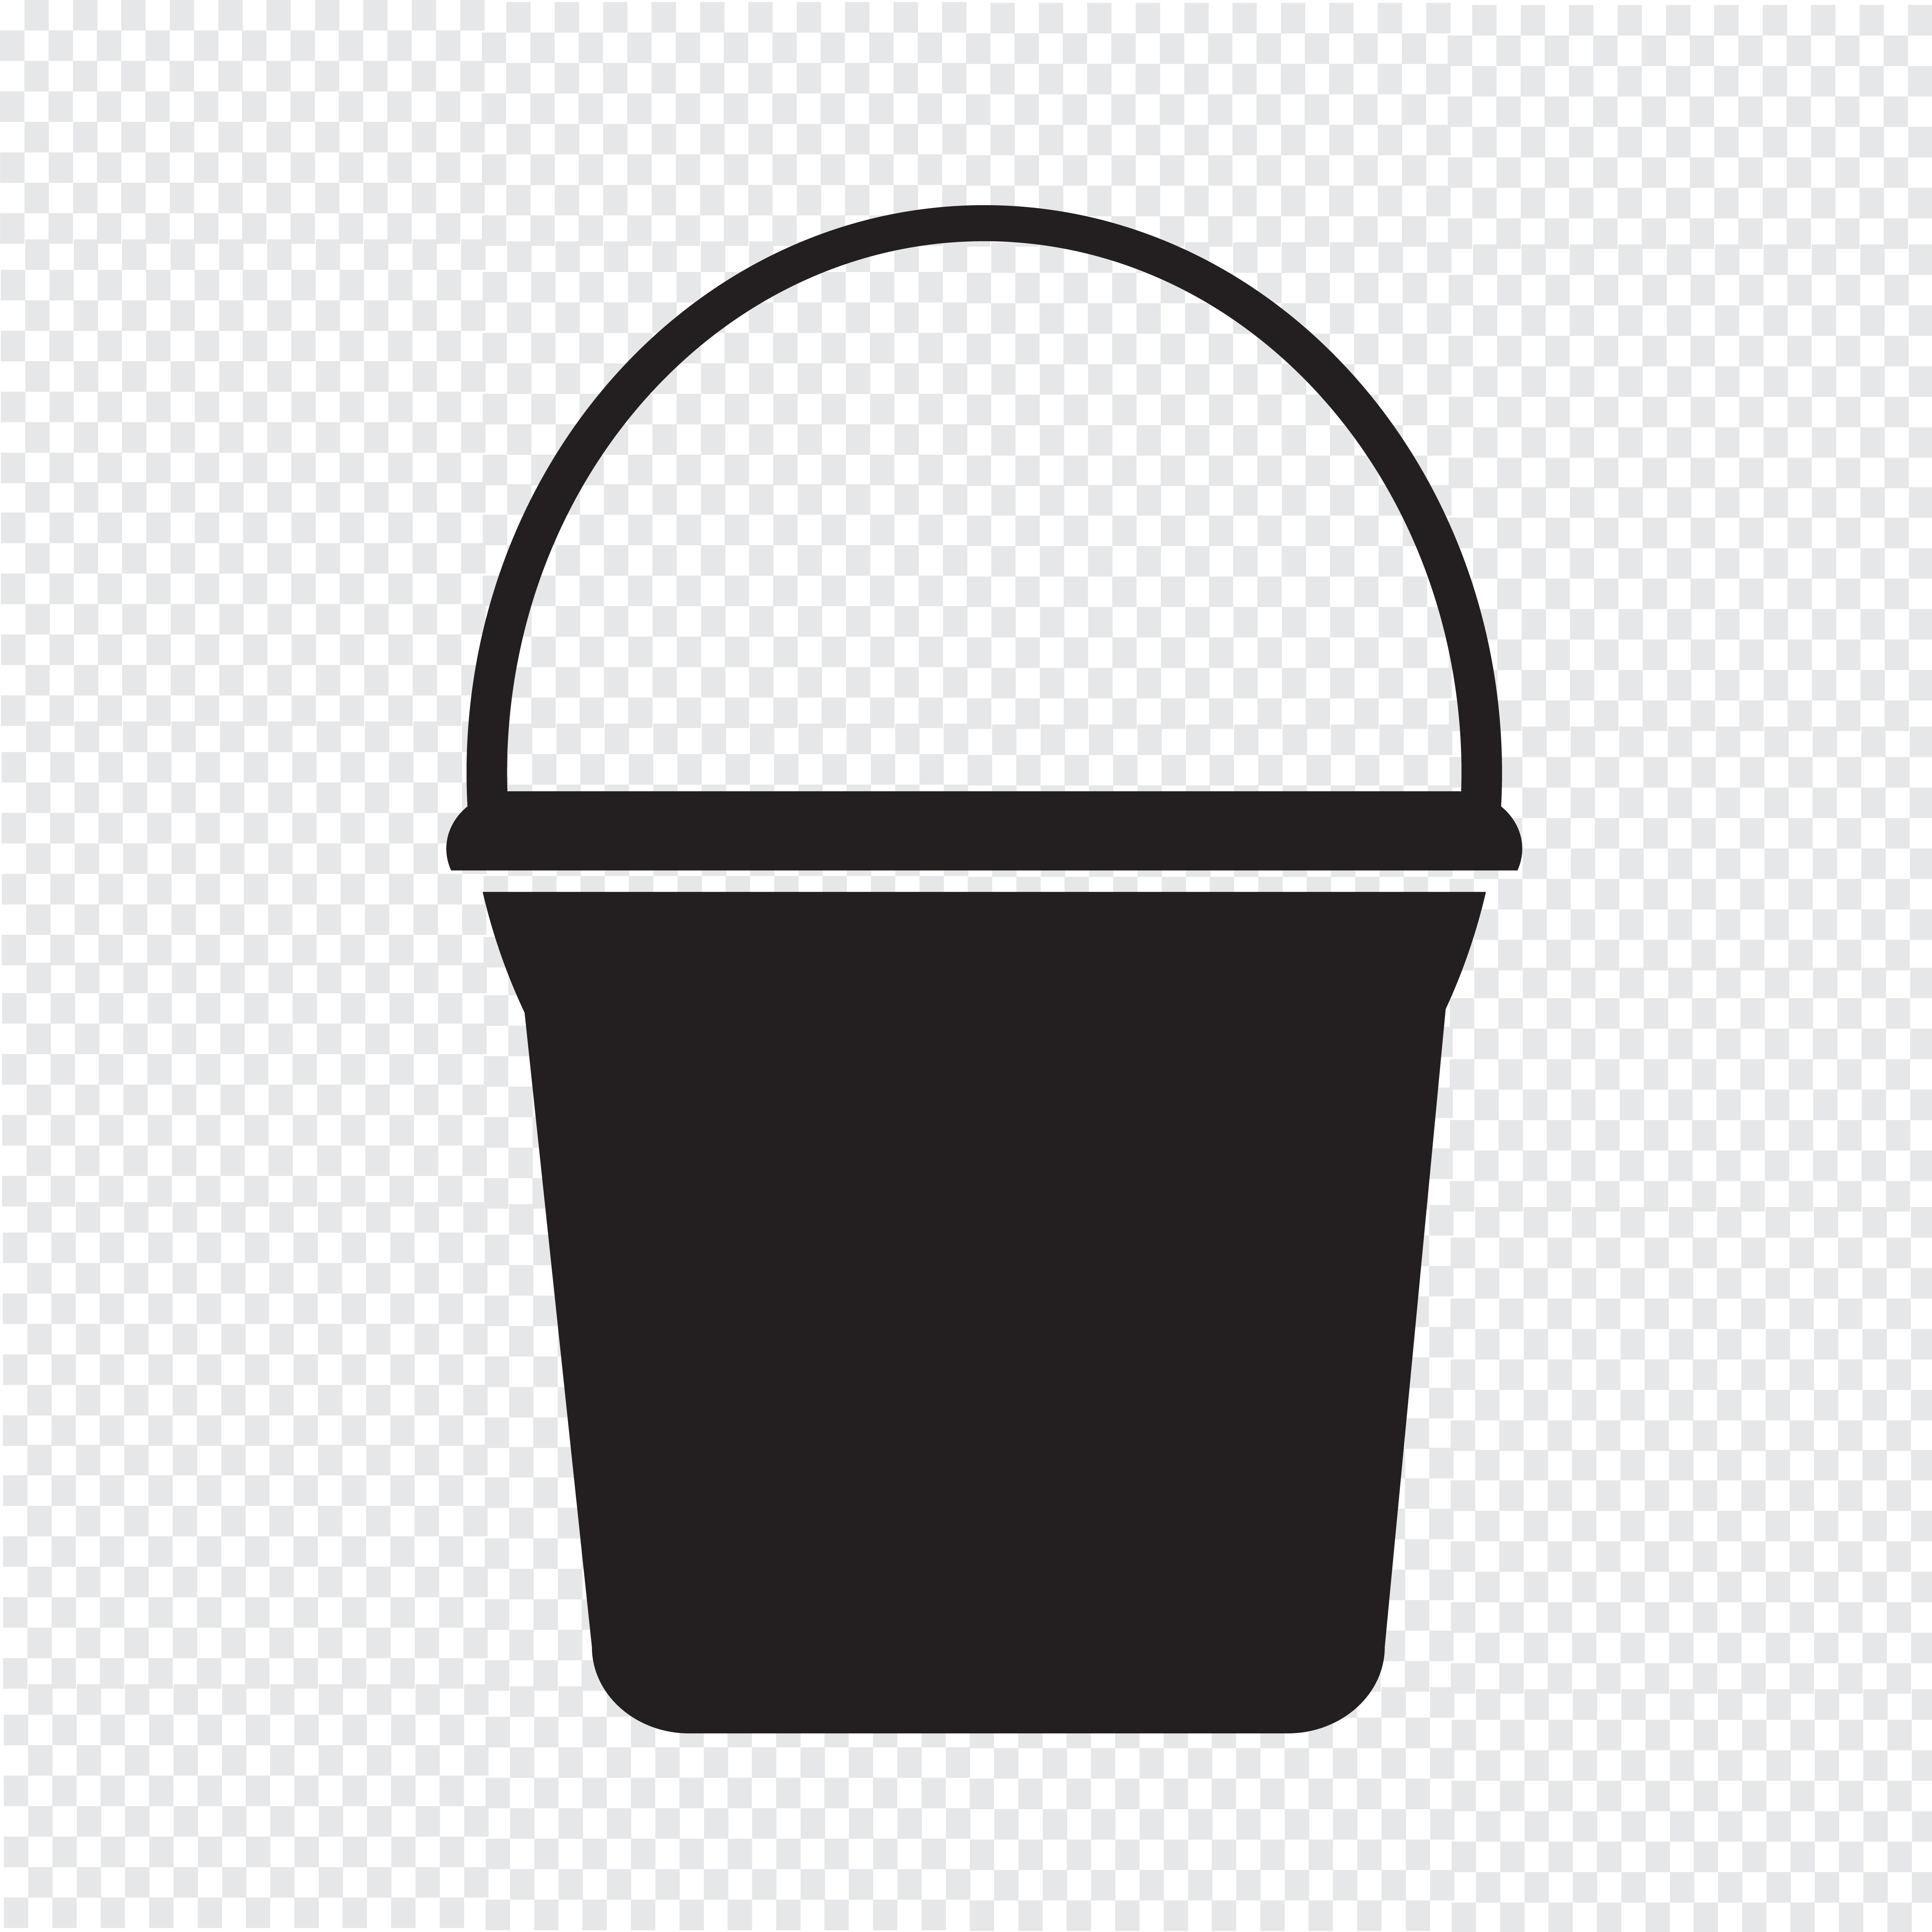 Download Bucket icon symbol sign - Download Free Vectors, Clipart ...